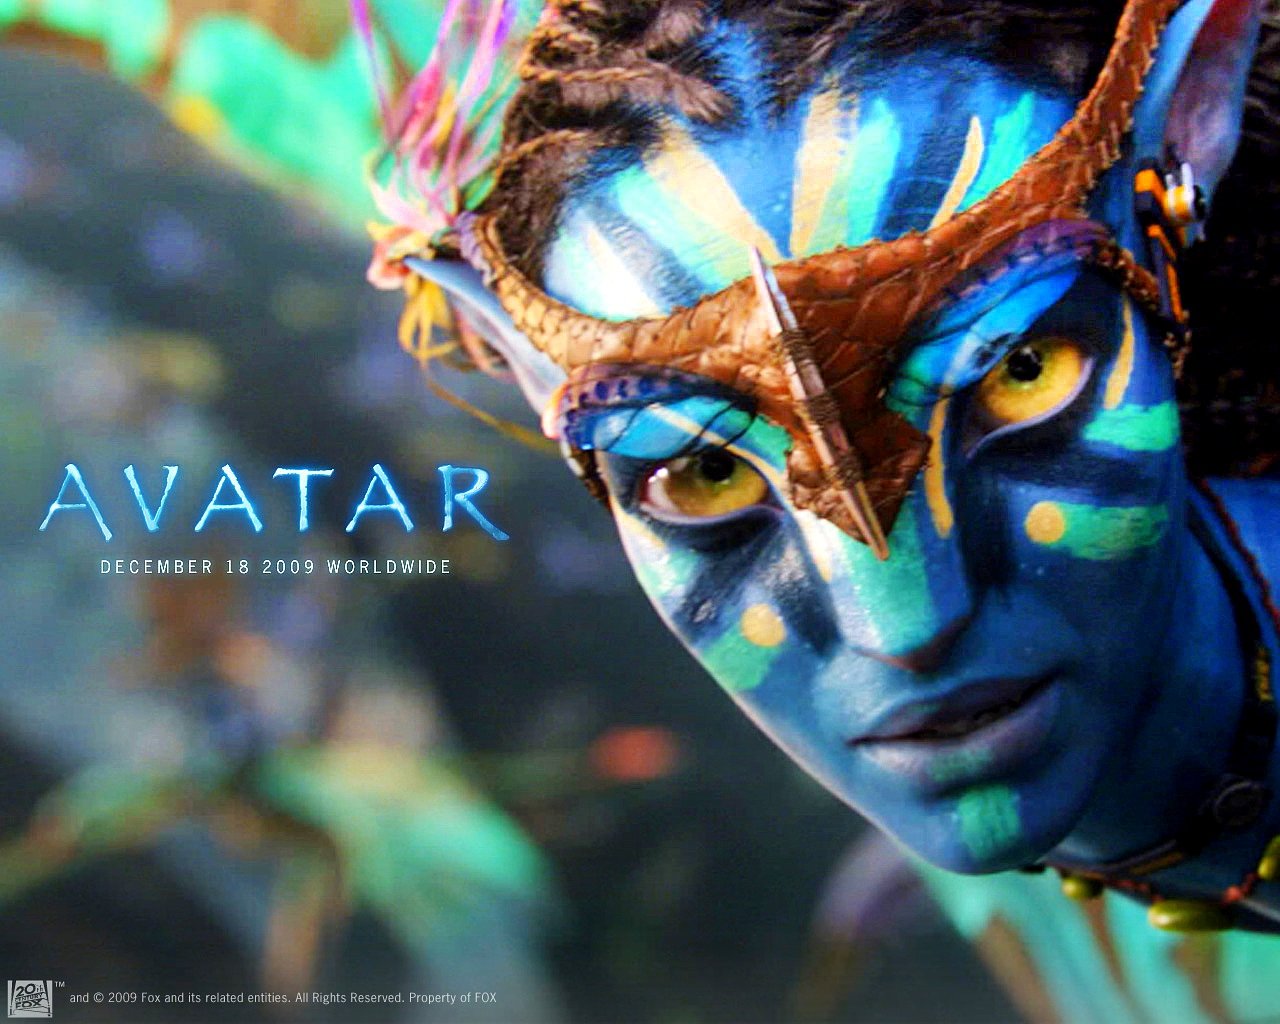 47+] Avatar HD Wallpaper - WallpaperSafari